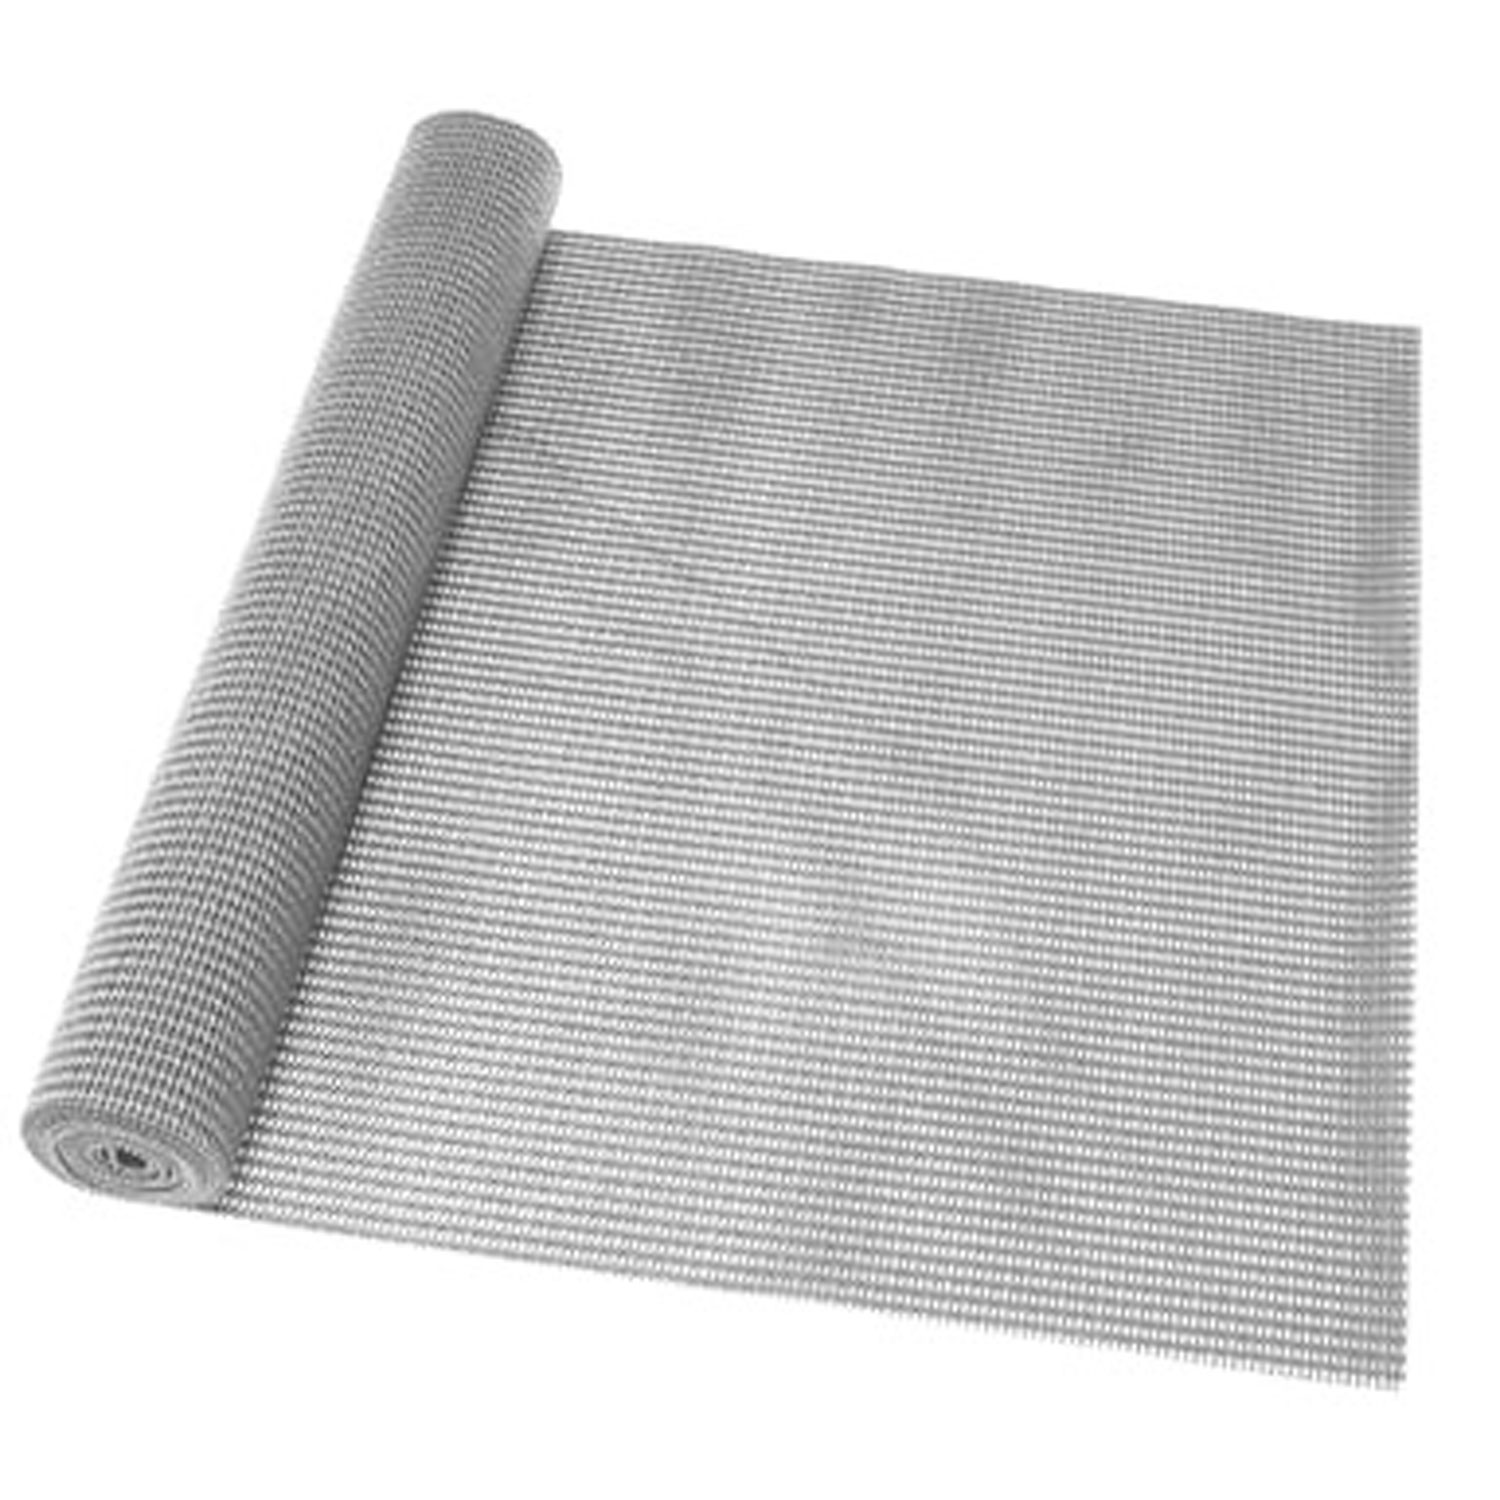 Non-adhesive PVC shelf liner, 25.5" x 4 feet - Grey